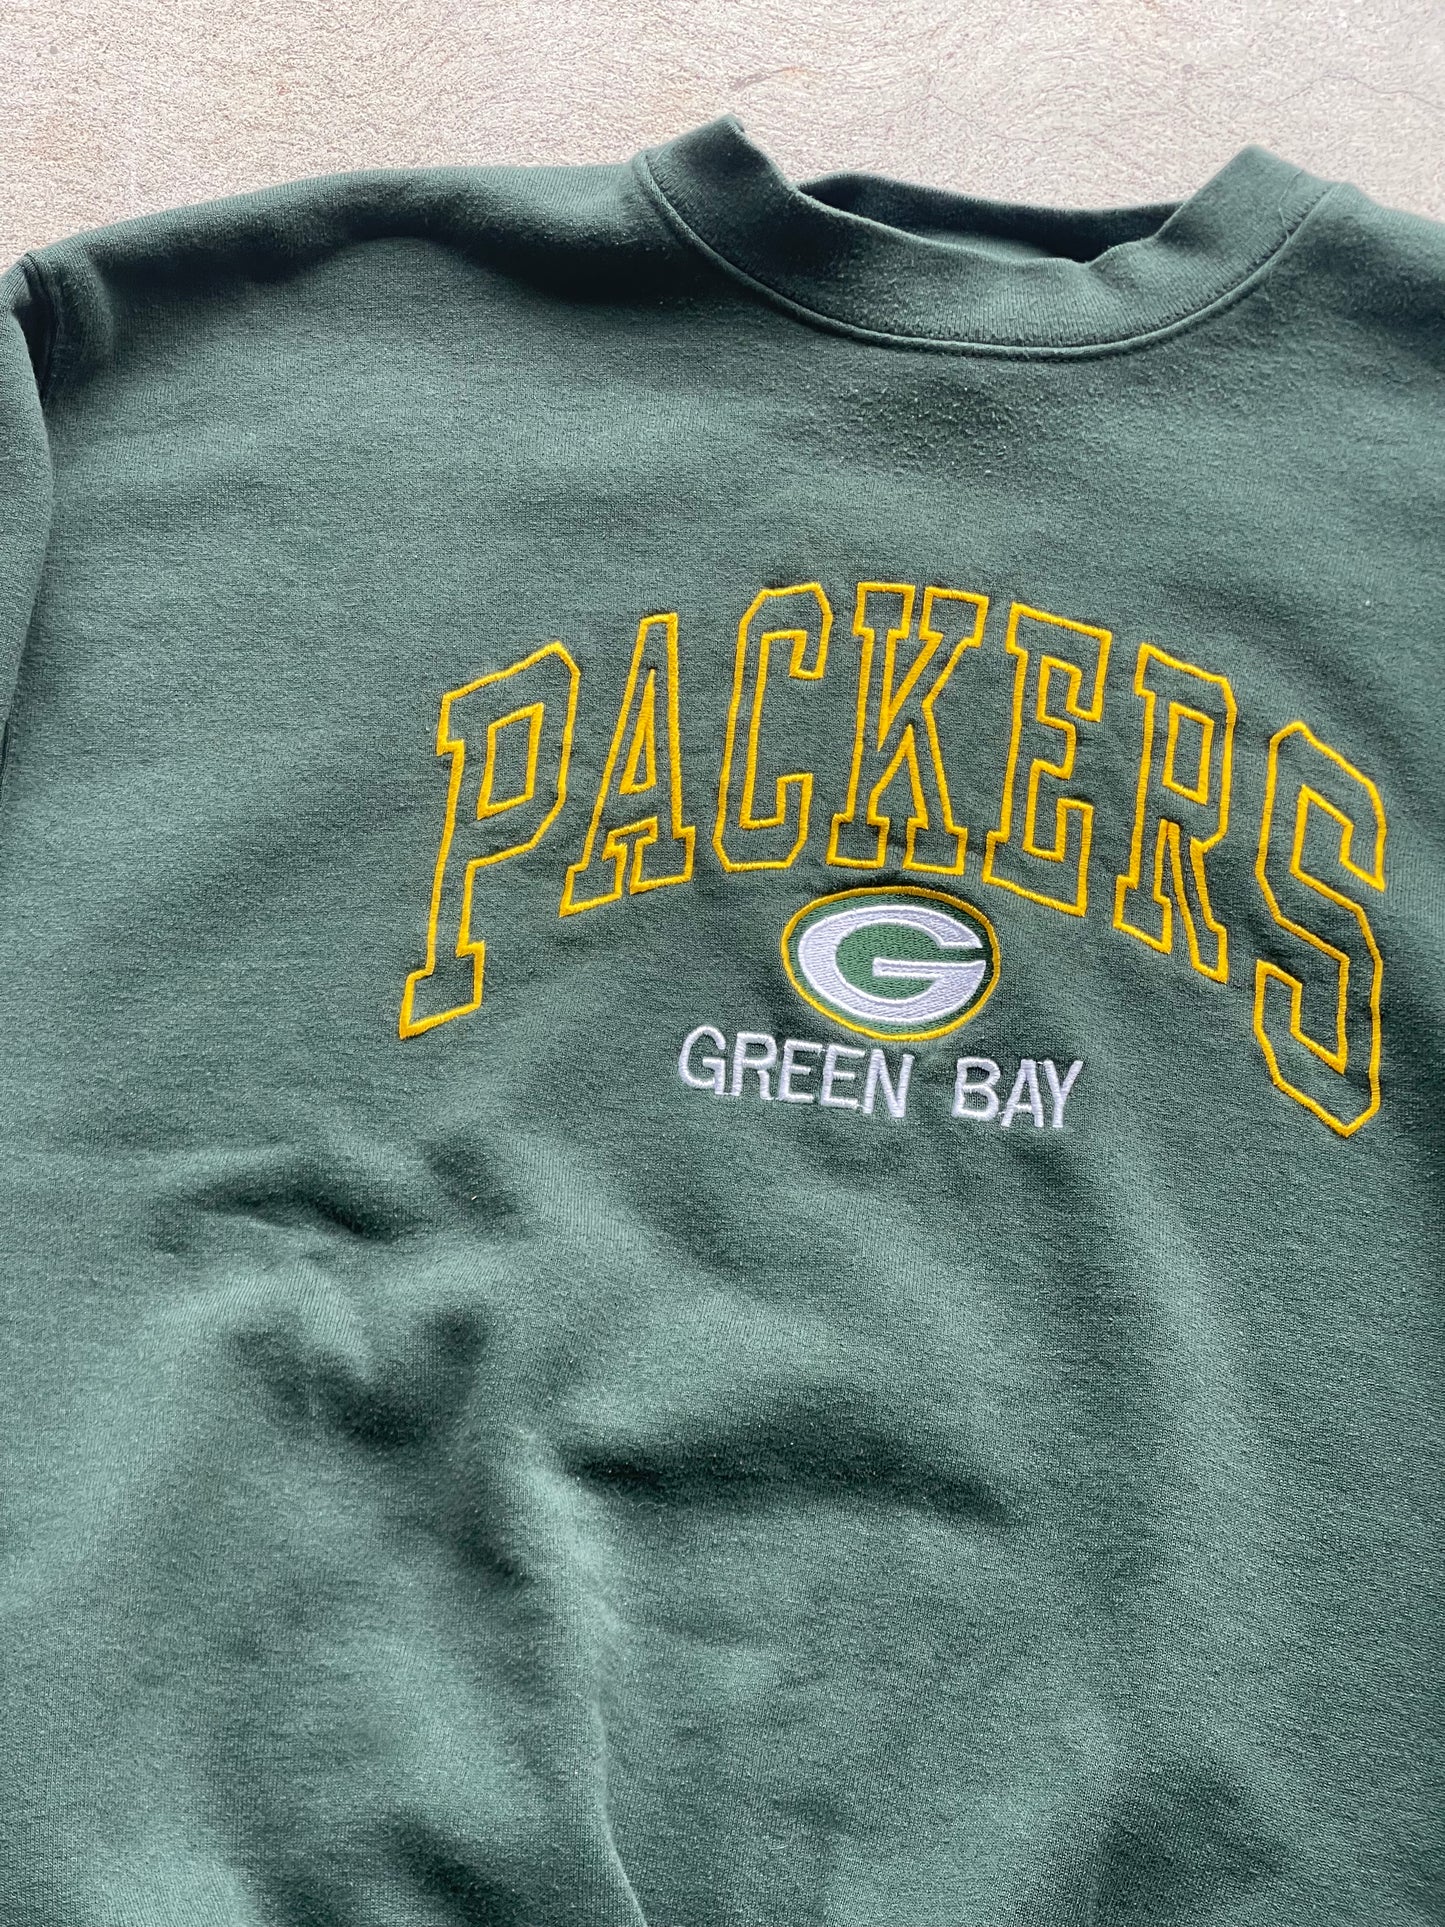 Pre-loved Green Bay Packers Sweatshirt - L